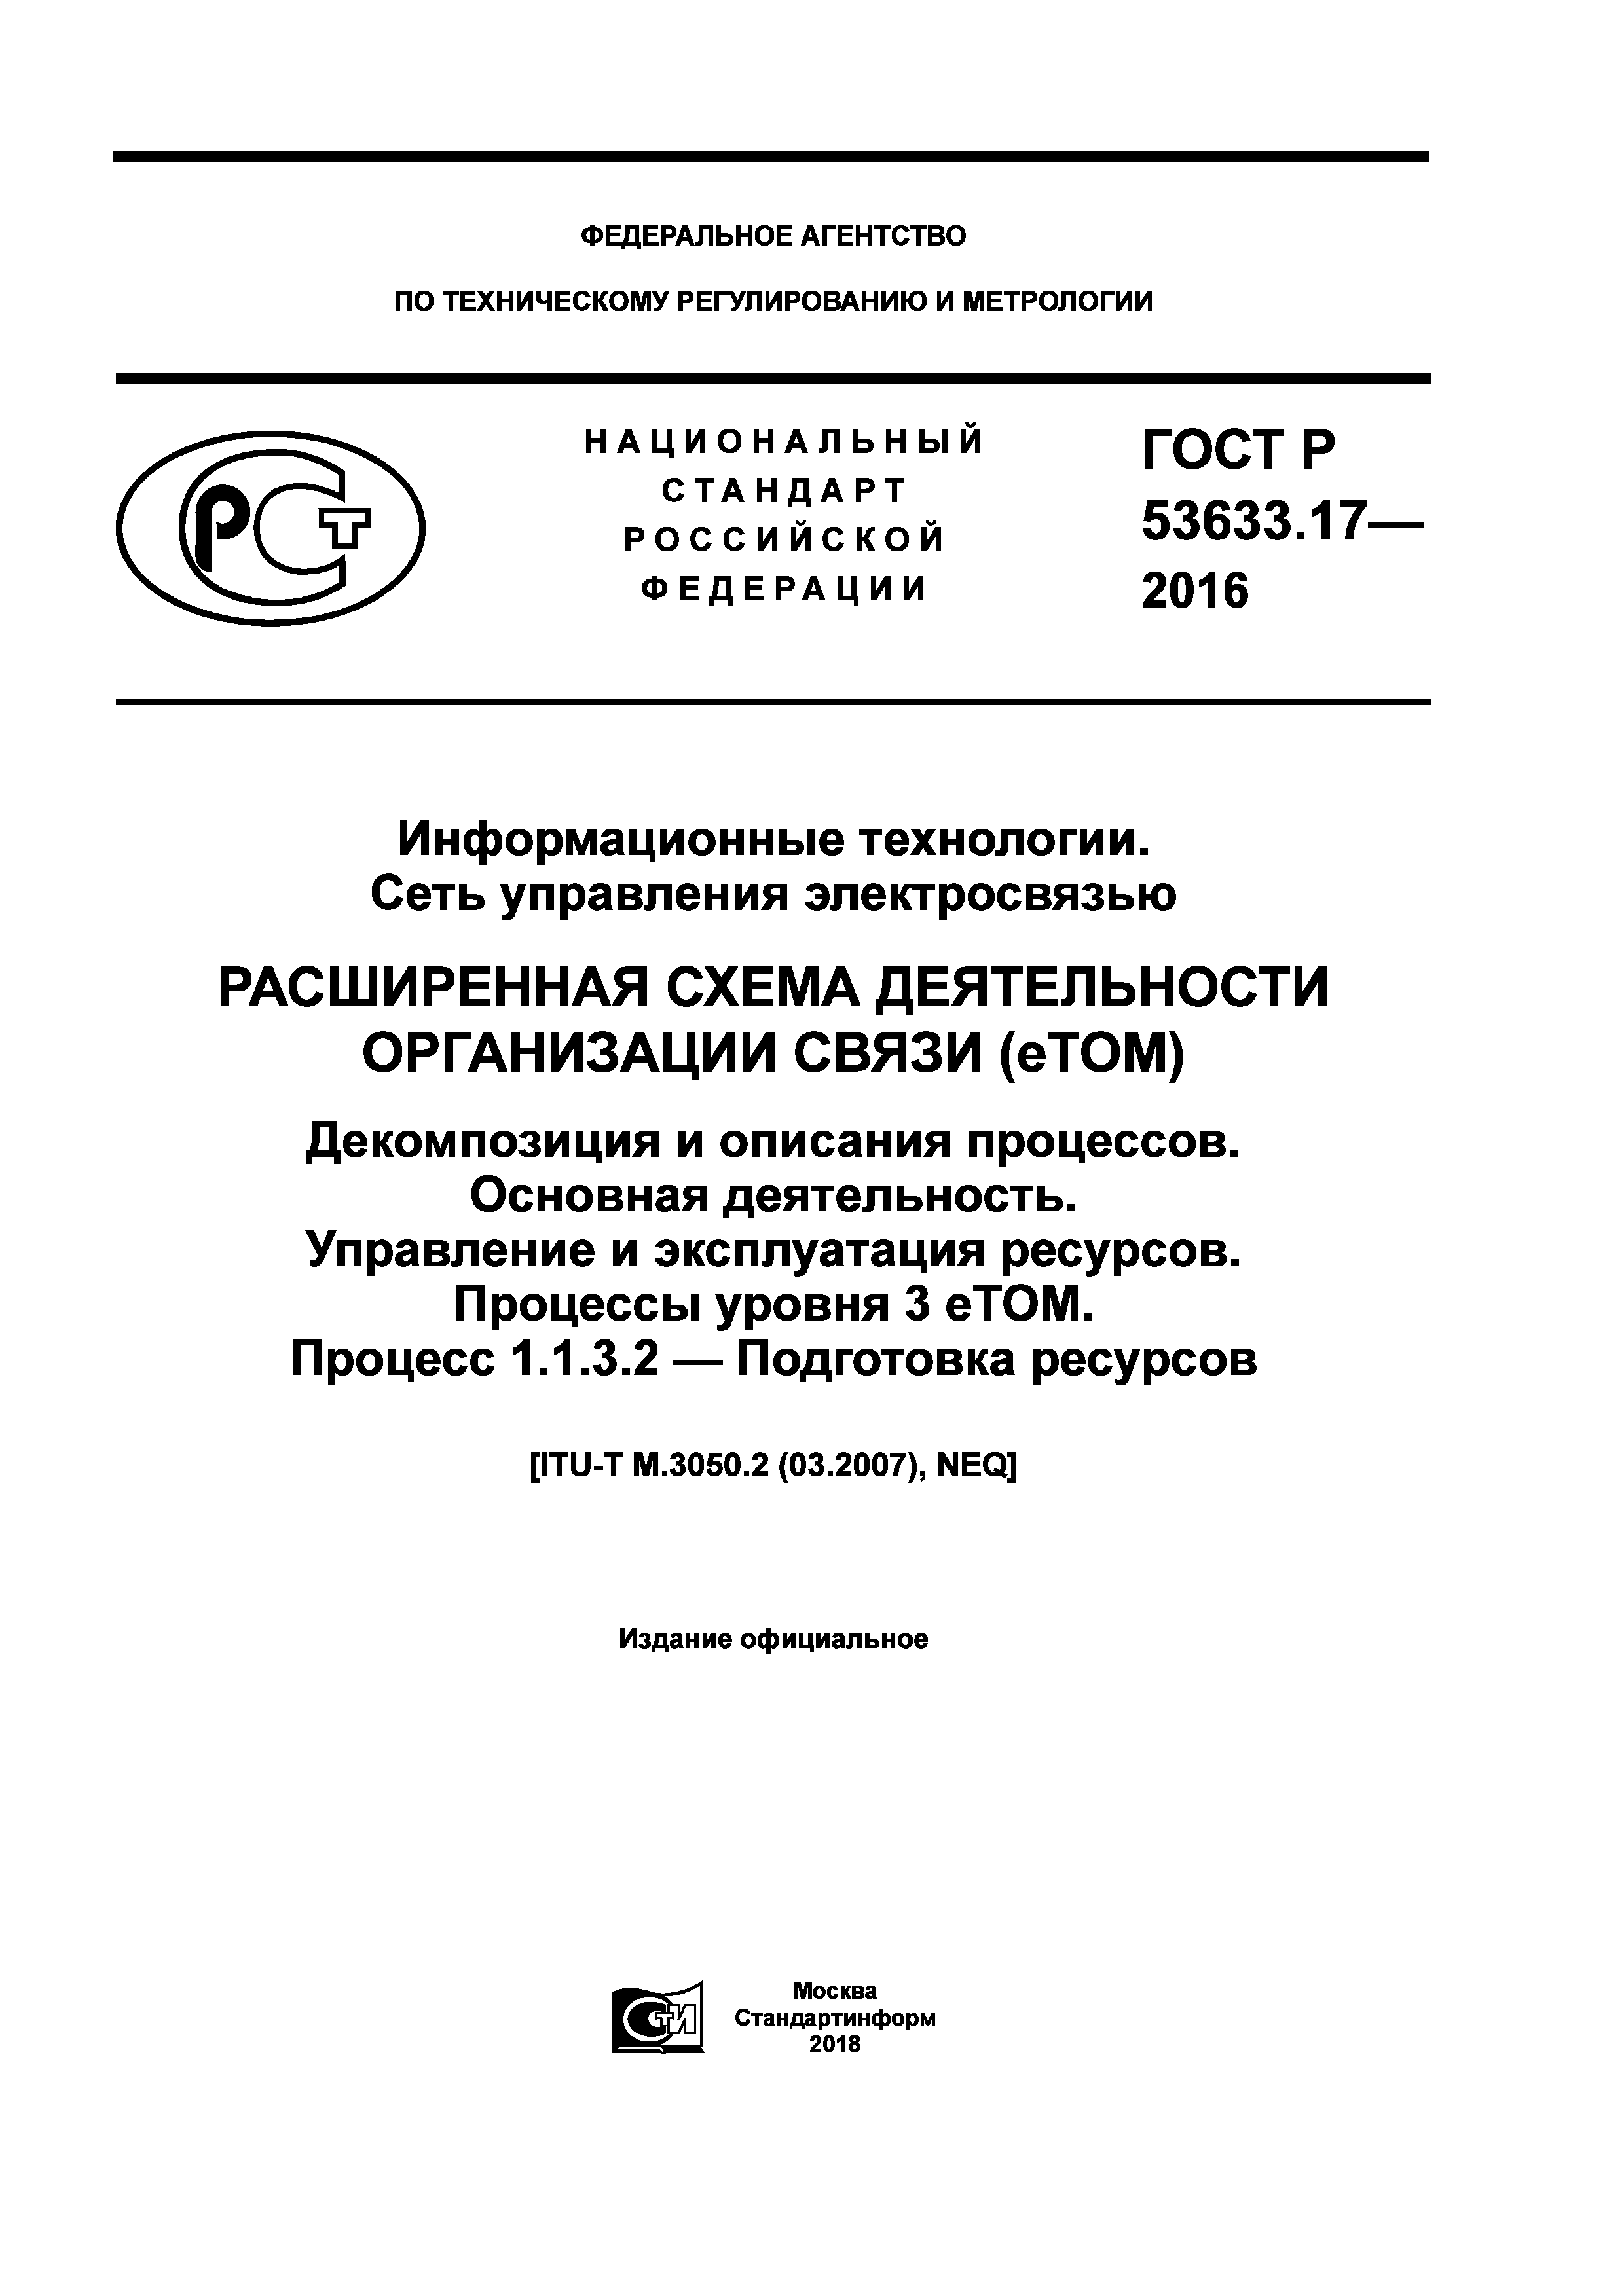 ГОСТ Р 53633.17-2016